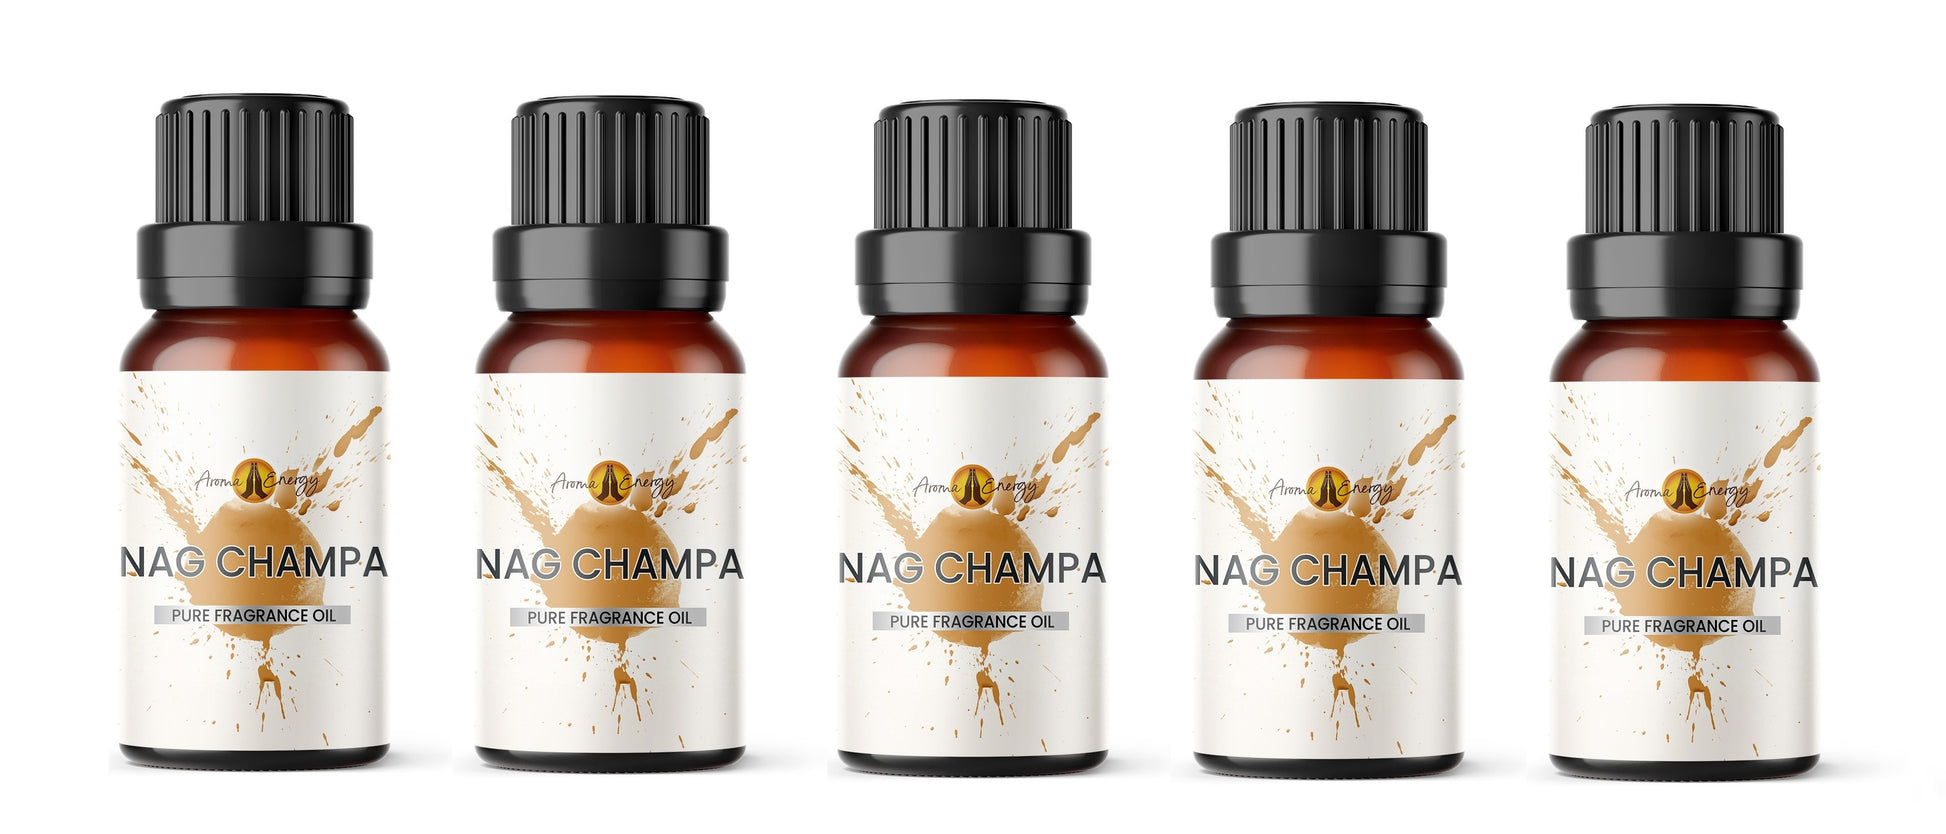 Nag Champa Fragrance Oil - Aroma Energy